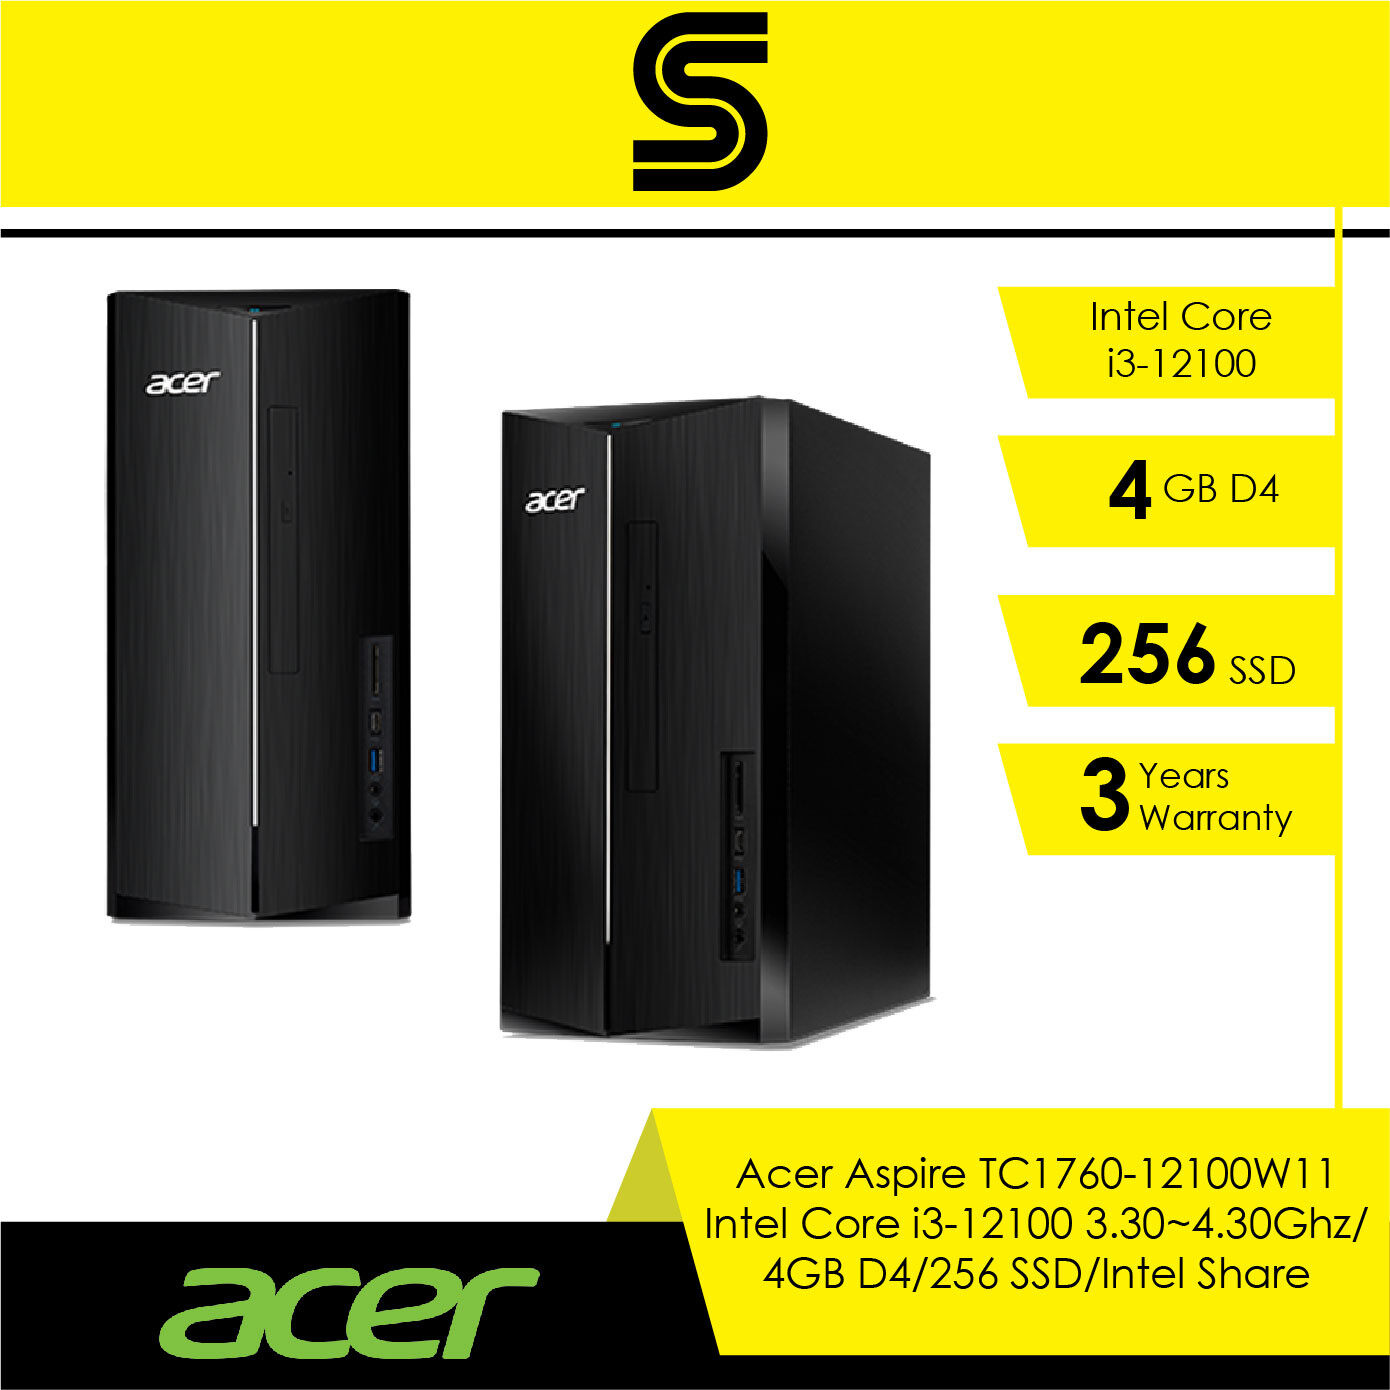 Acer Aspire TC1760-12400/12100W11/Intel Core i5-12400-i3-12100/4GB D4/256 SSD/Intel Share/No Odd/Acer Wireless KB&MSE/Windows 11/3 Years Local Onsite Warranty